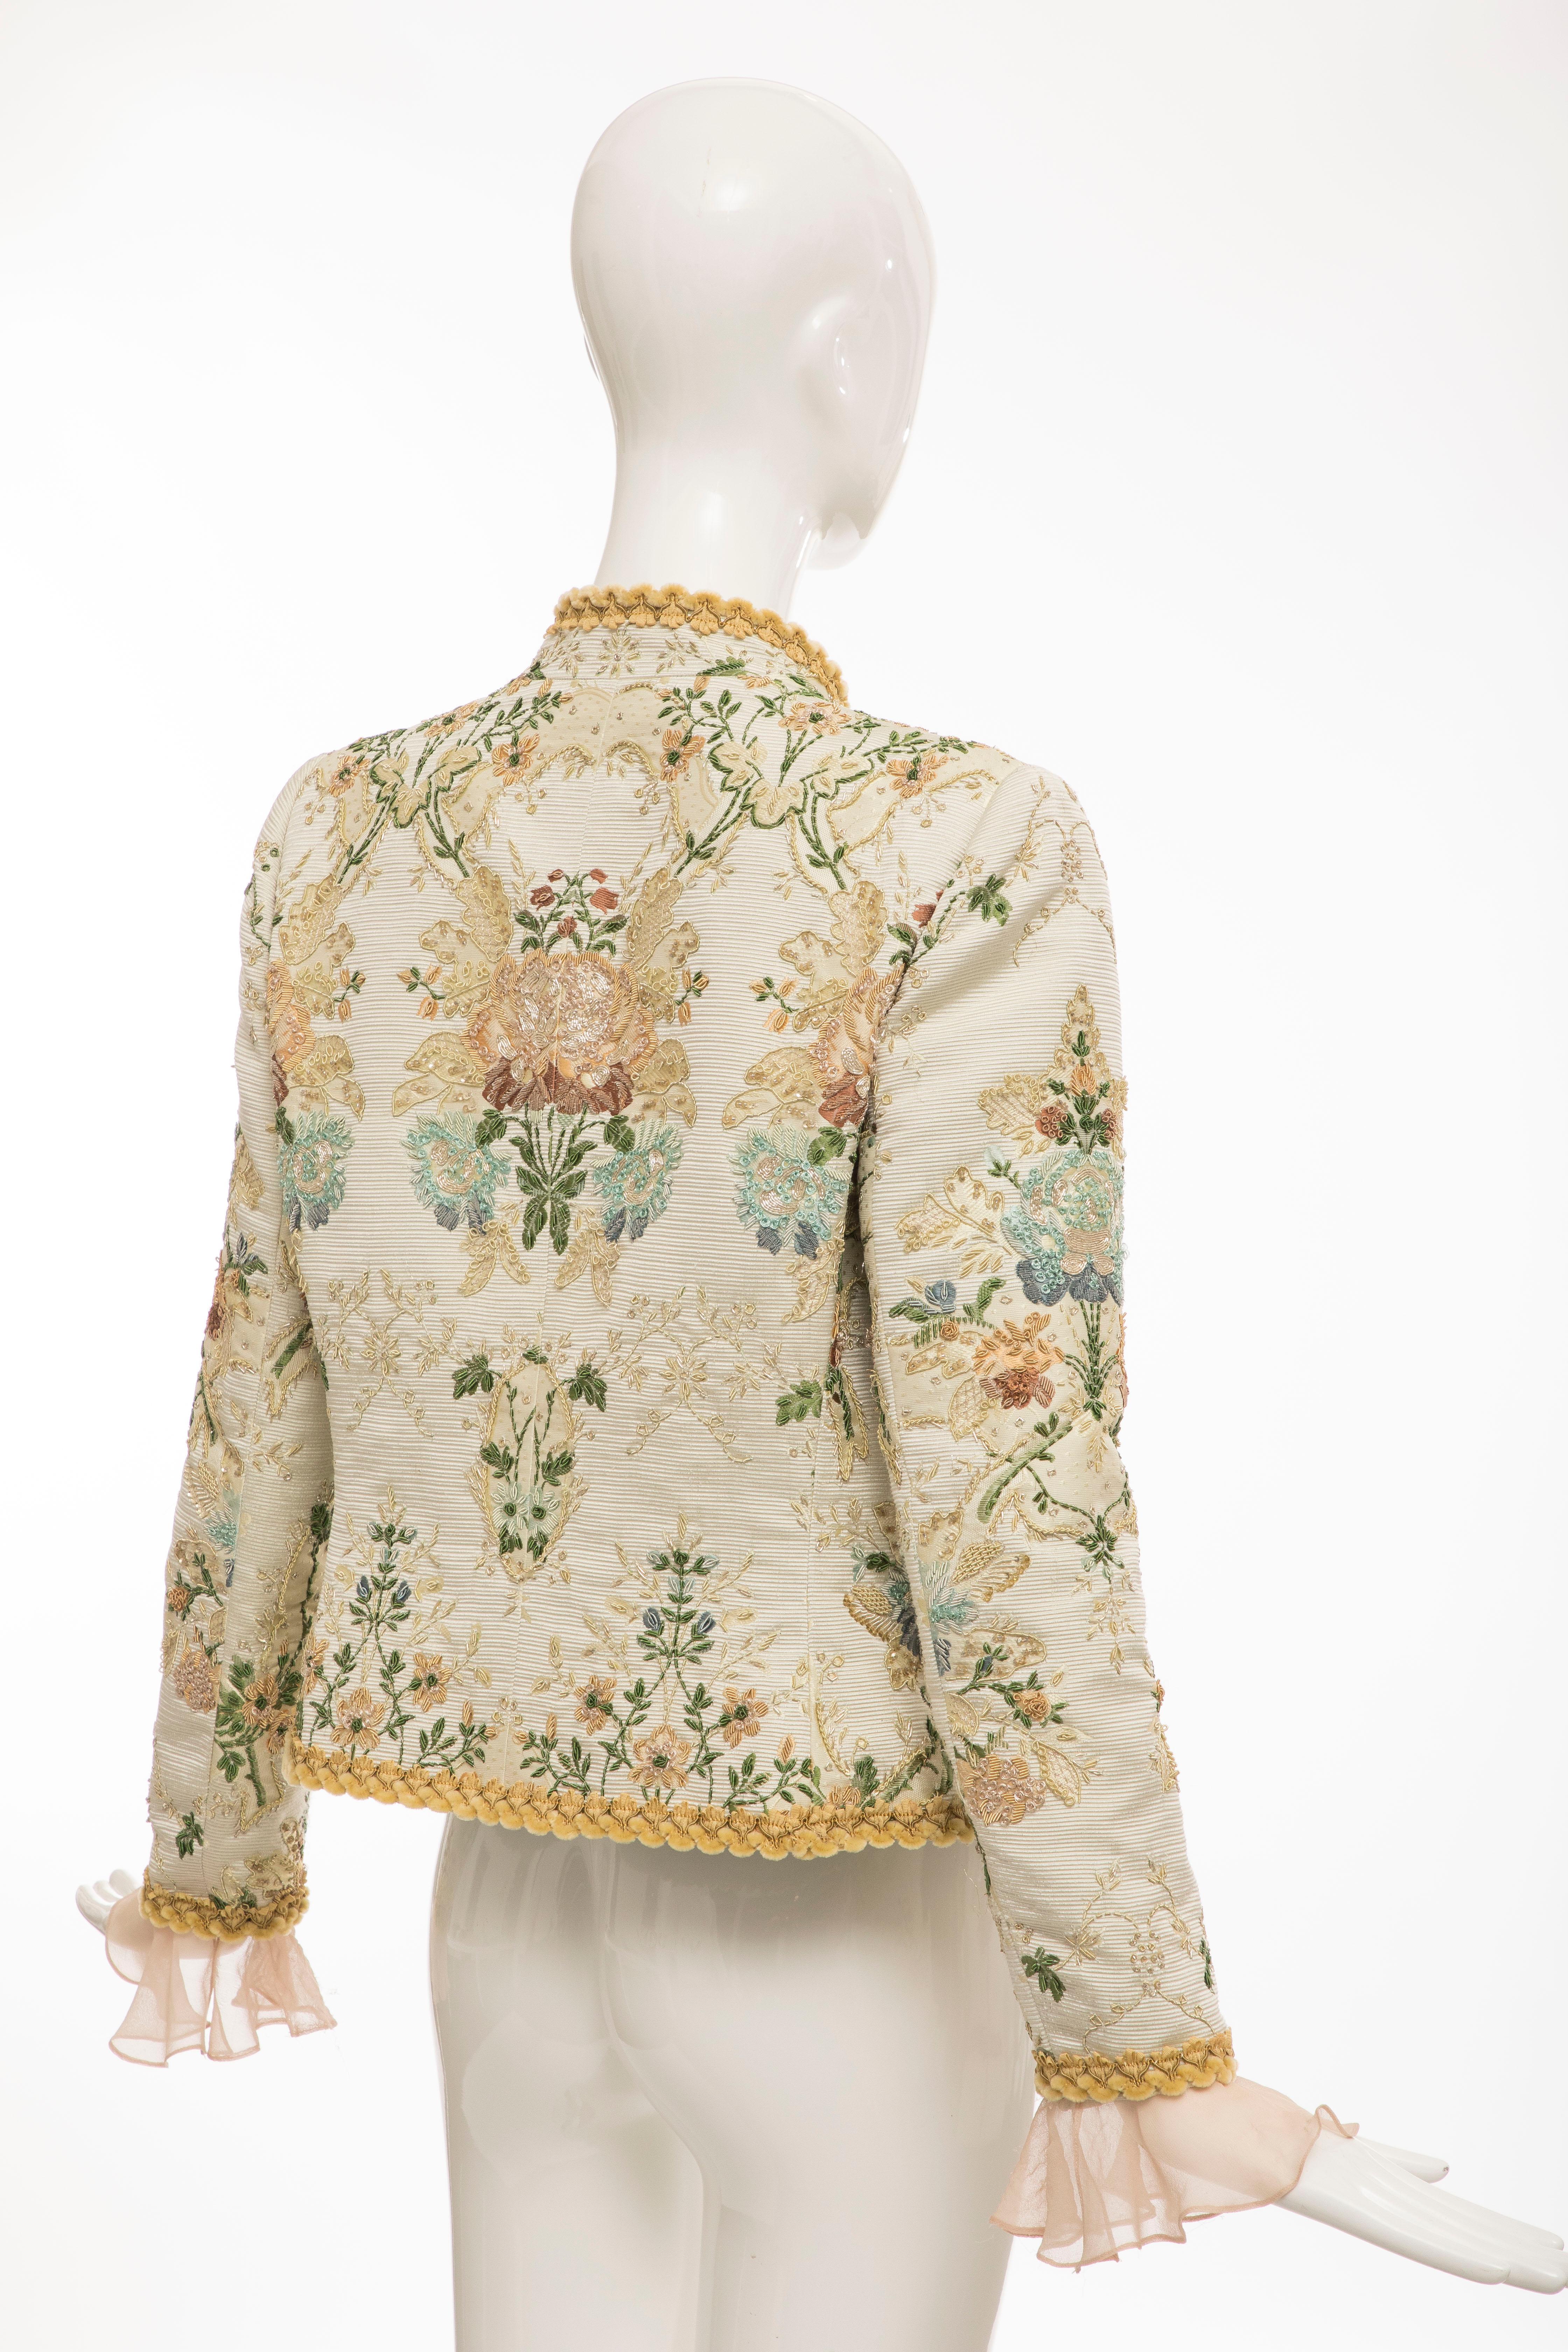 Oscar de la Renta Lesage Embroidered Evening Jacket, Circa: 1990's For Sale 1